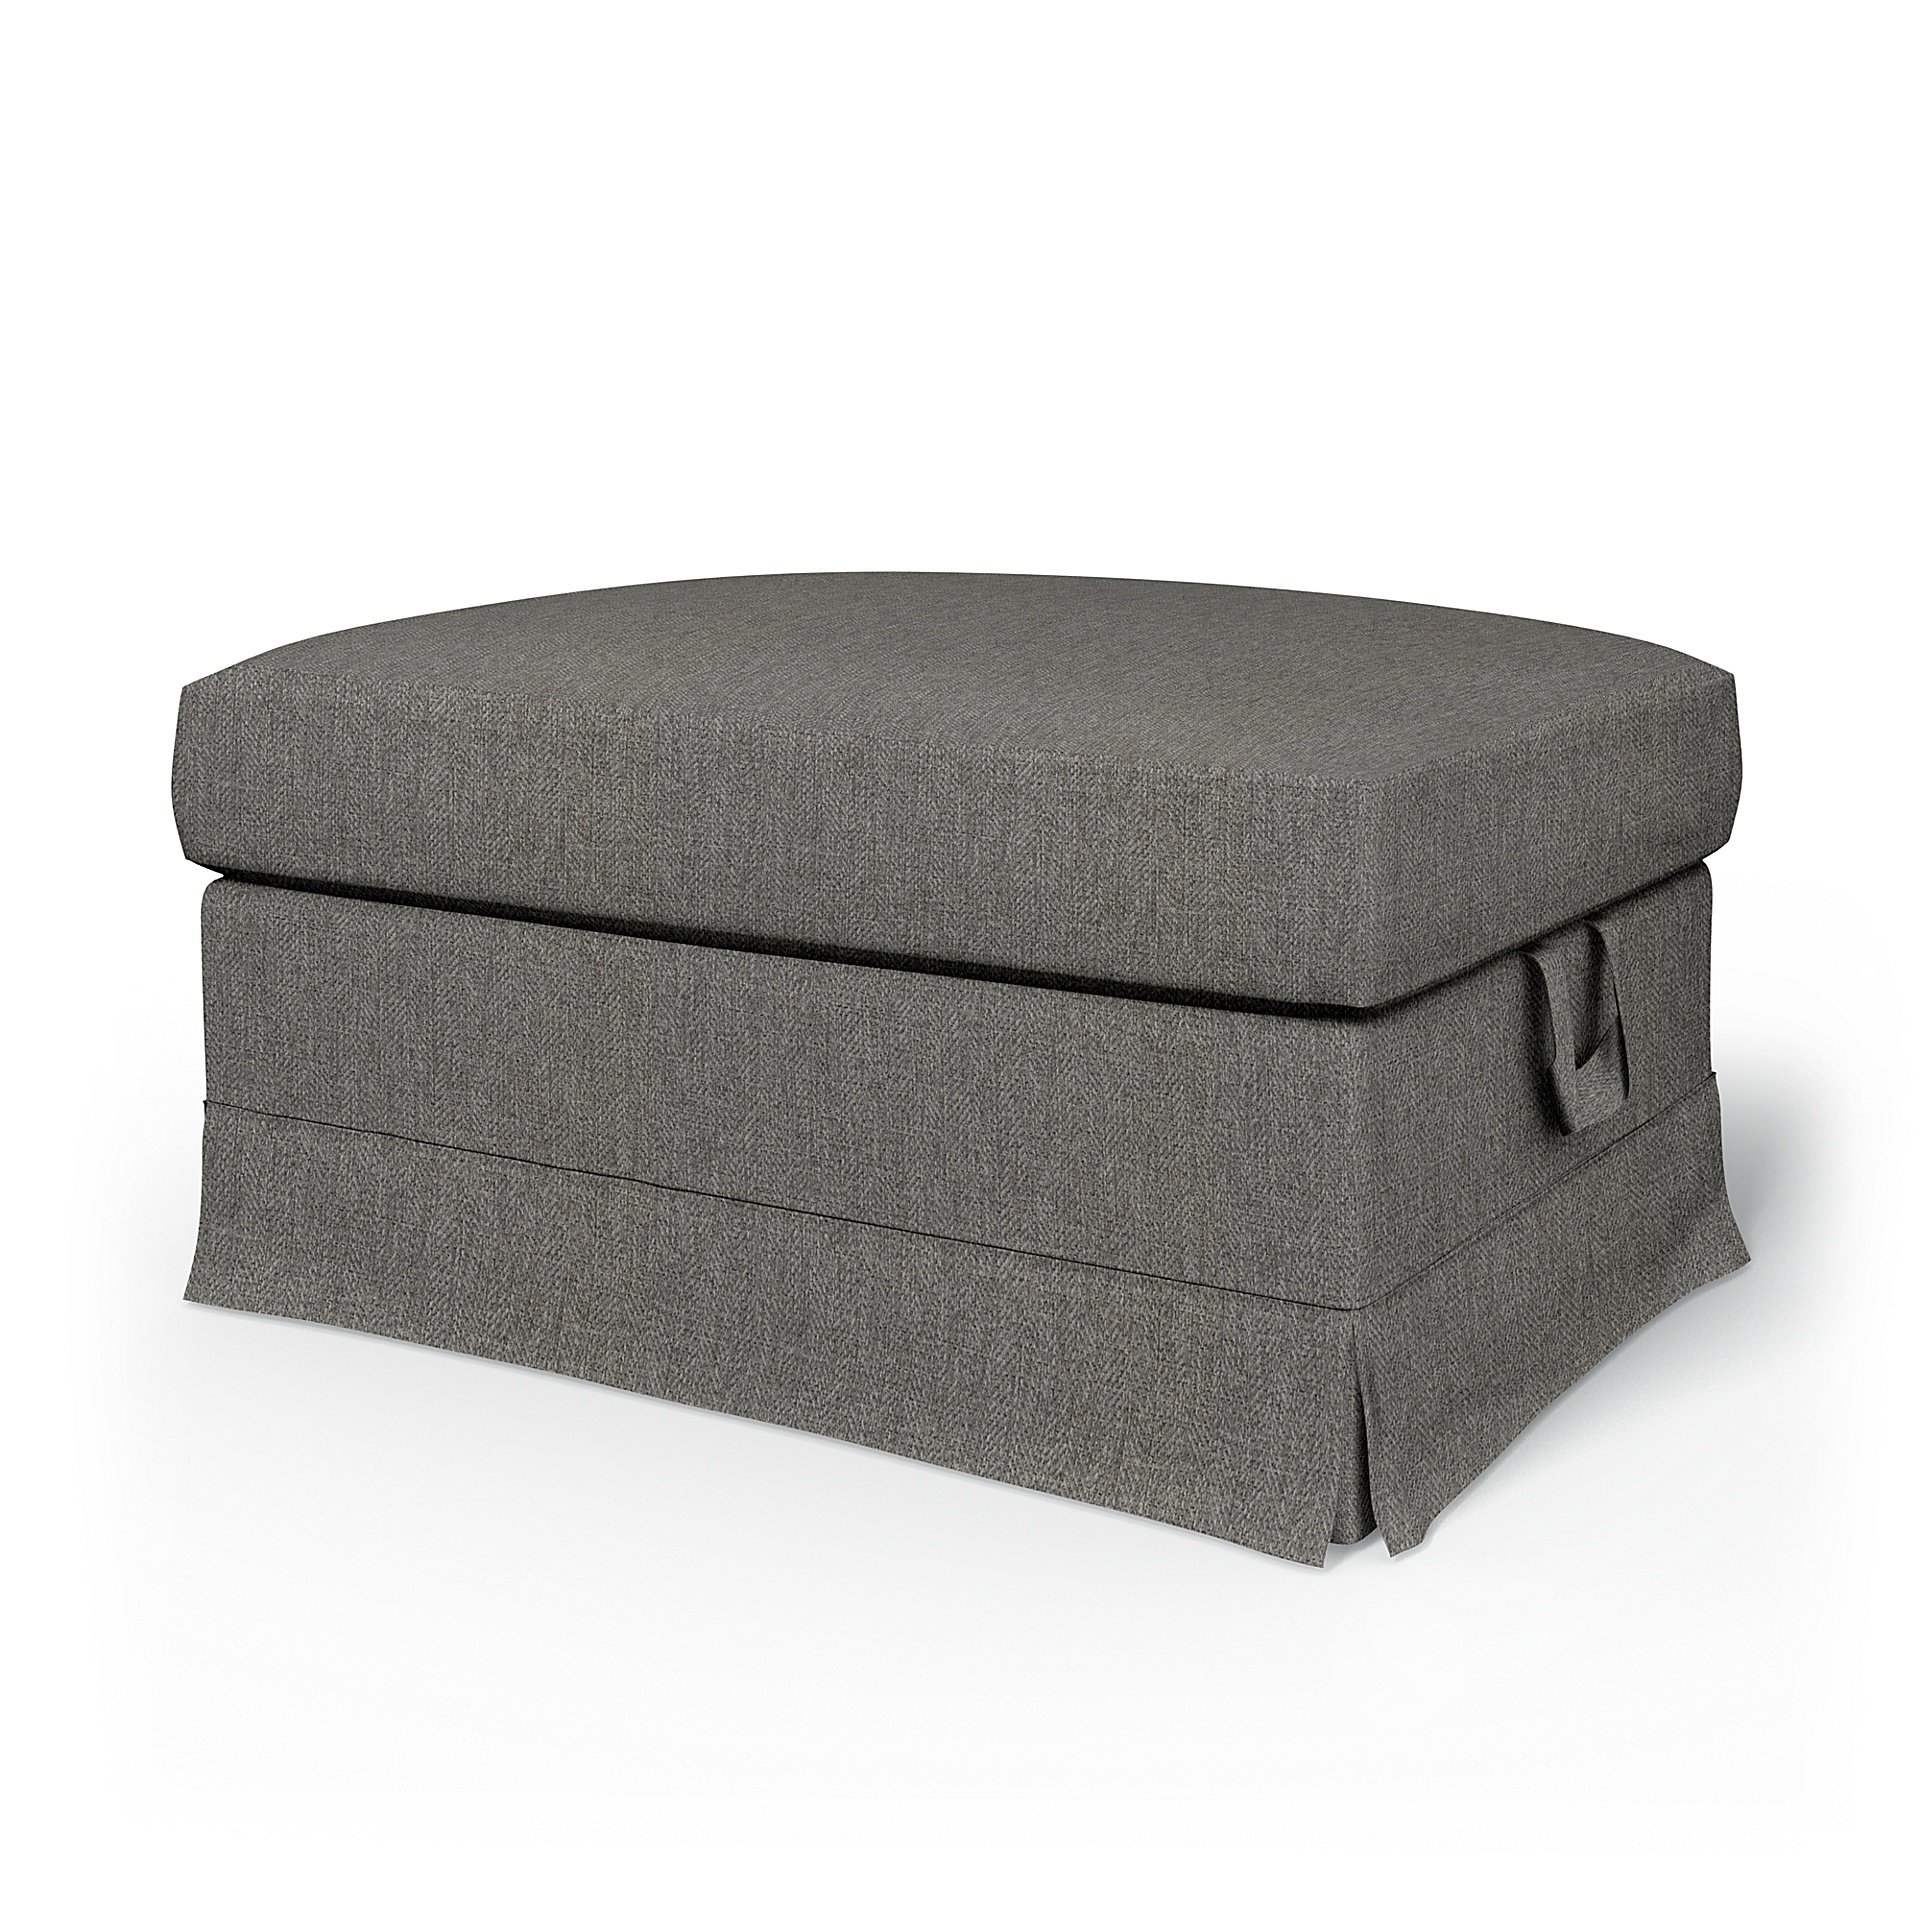 IKEA - Ektorp Footstool Cover, Taupe, Boucle & Texture - Bemz